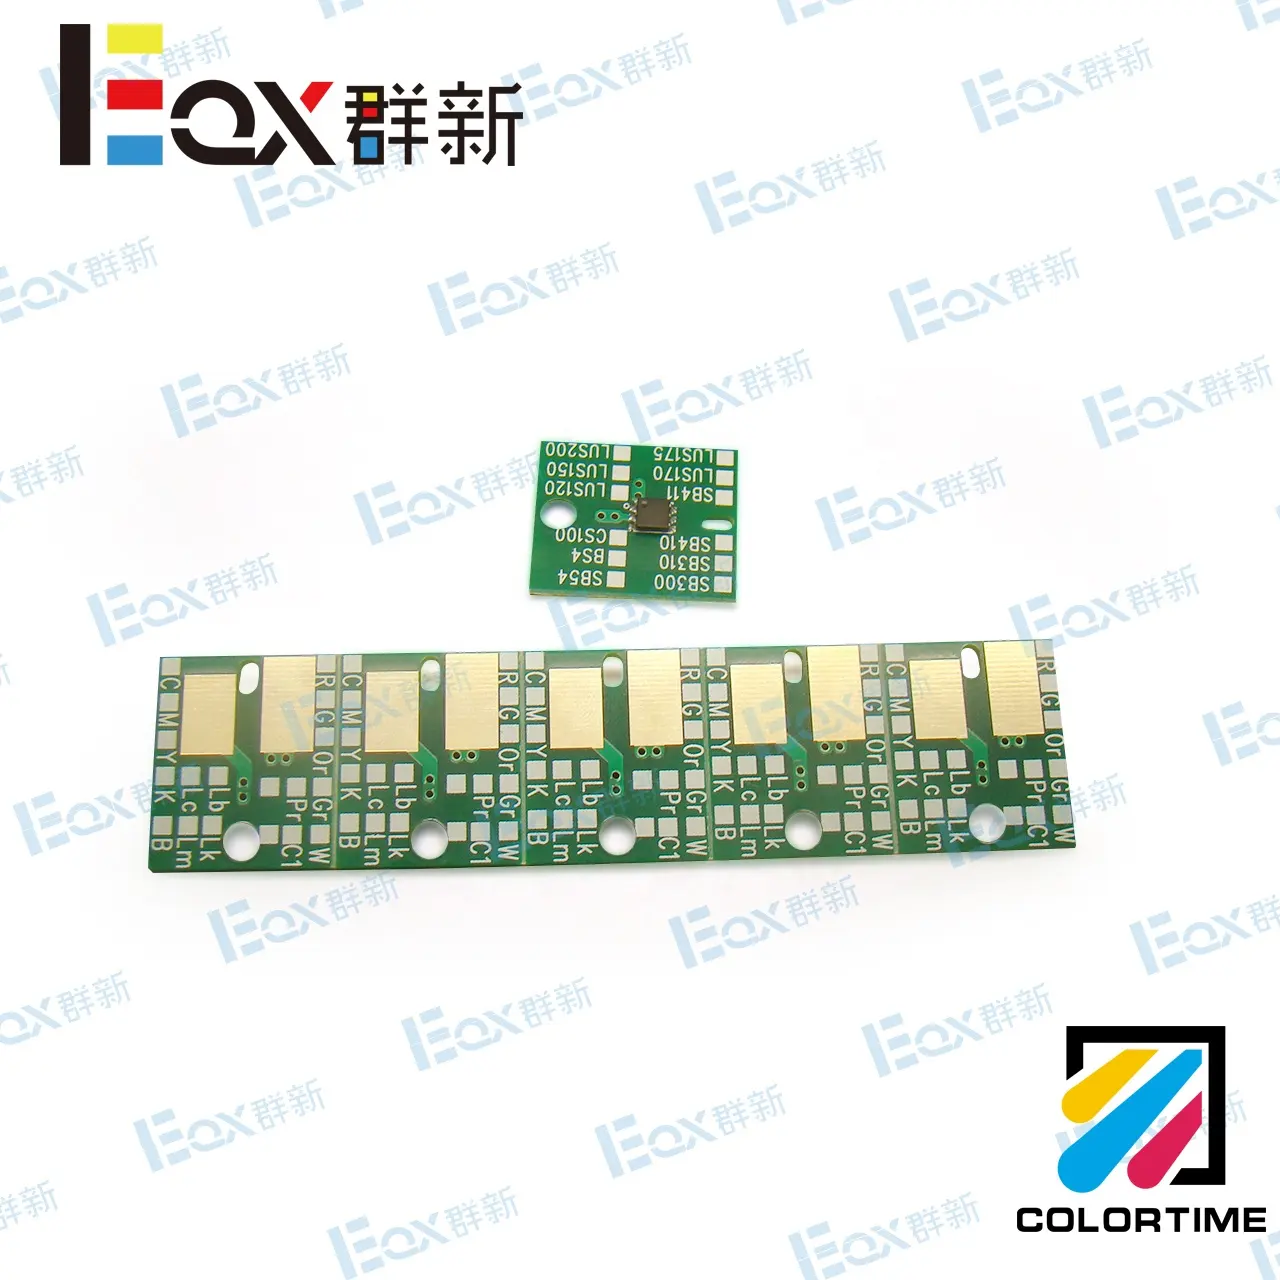 LUS 170 LUS175 LUS120 LUS150 SB54 One Time Chip For Mimaki UCJV300 Series